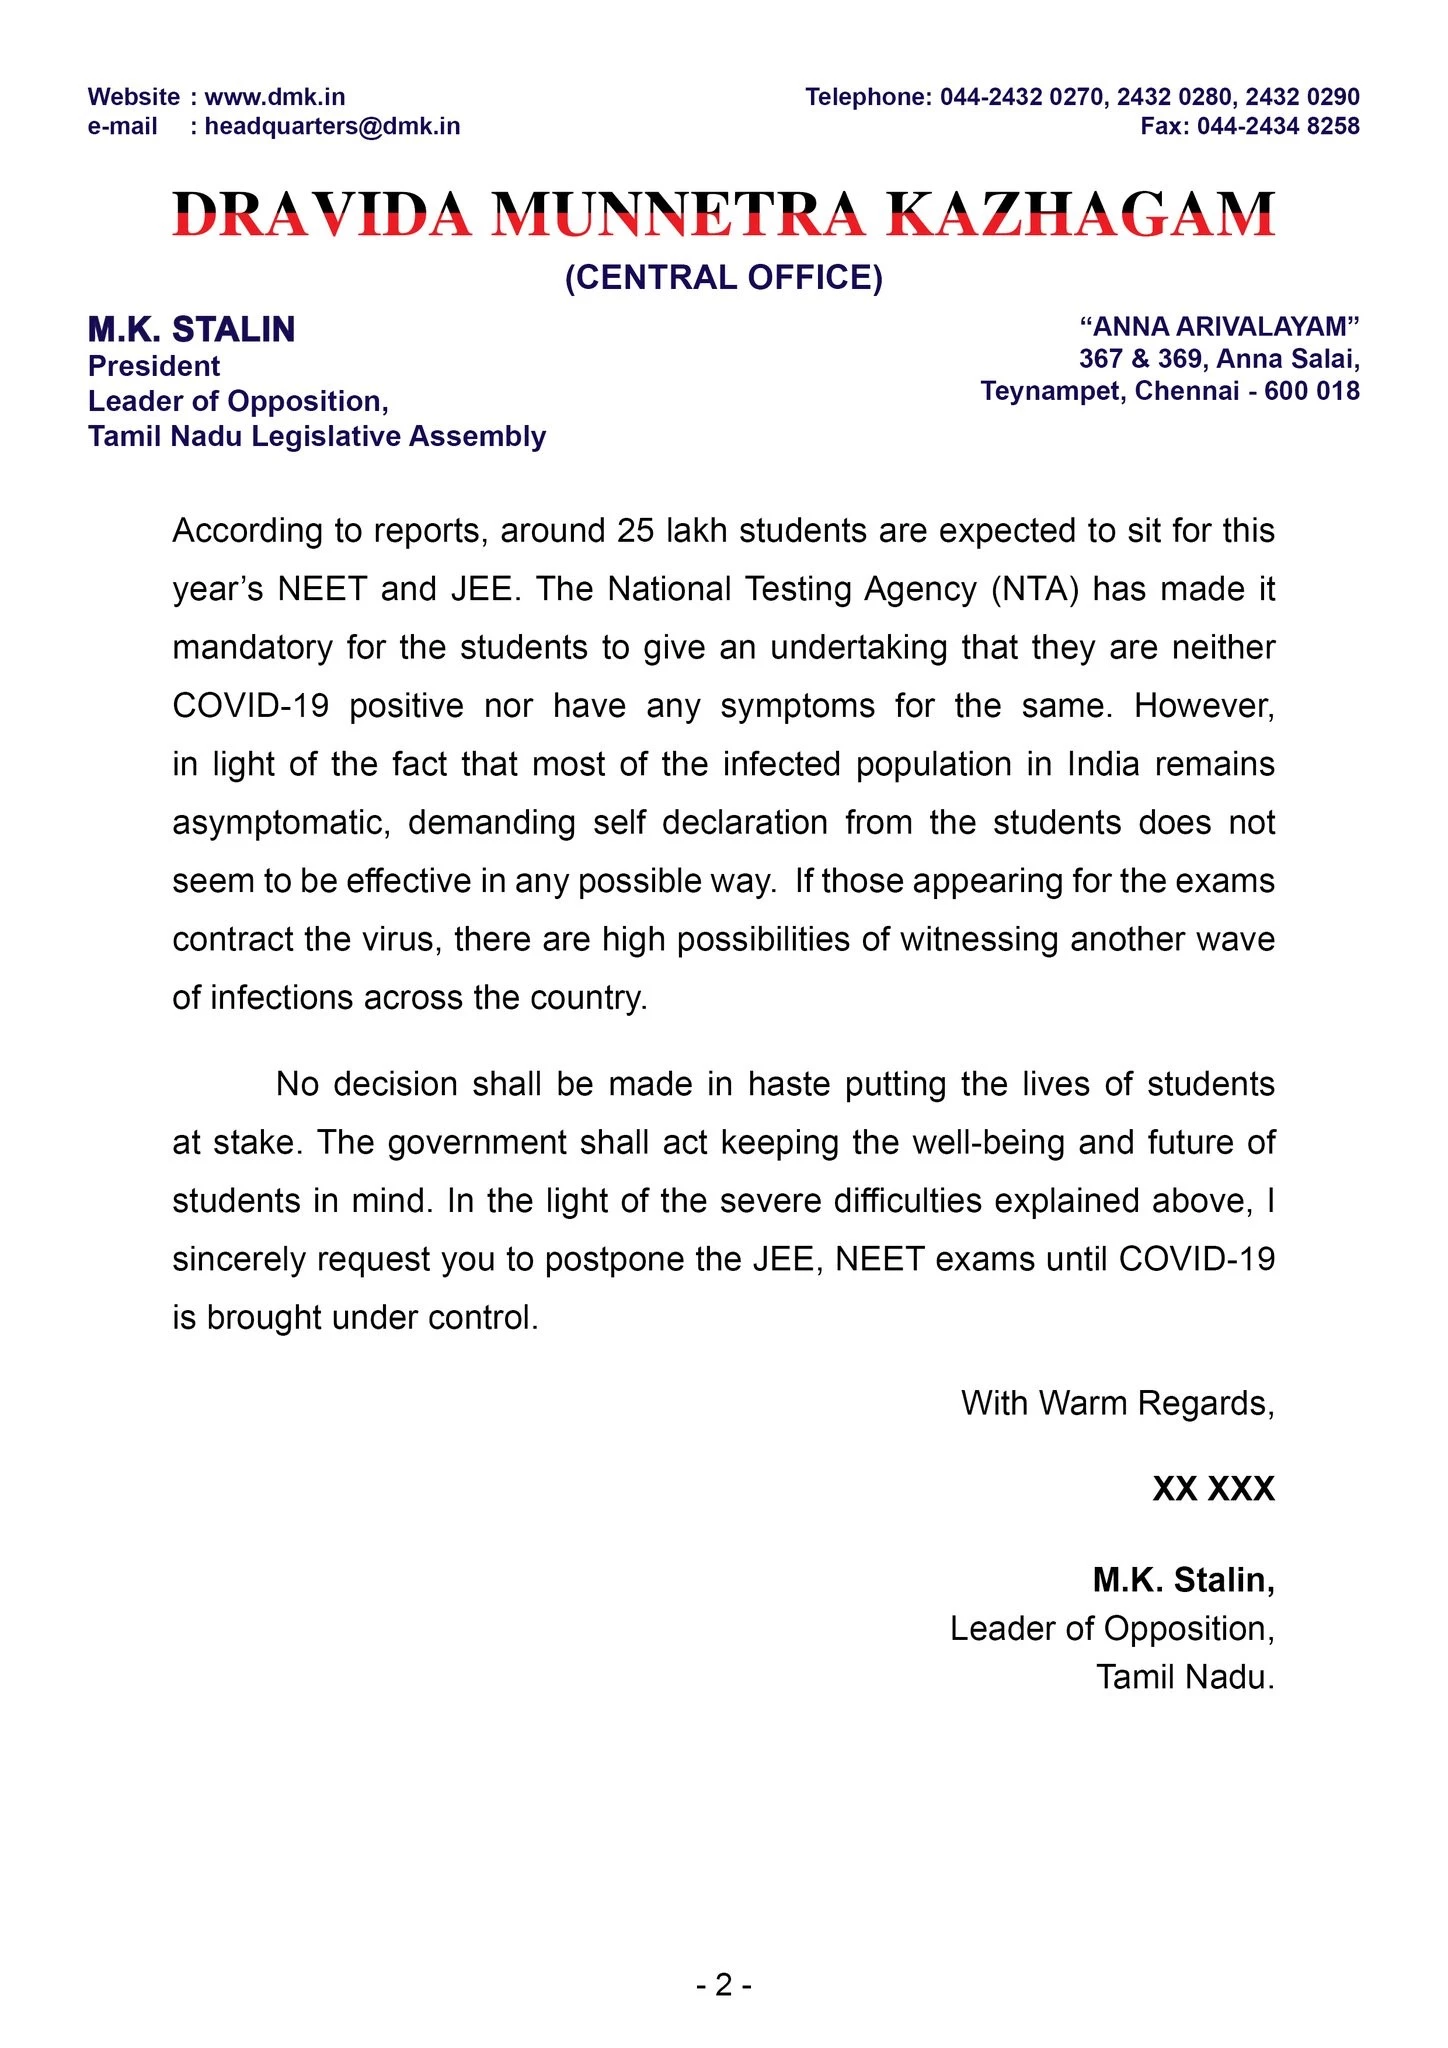 DML Leader, MK Stalin has written a letter to Education Minister for postponement